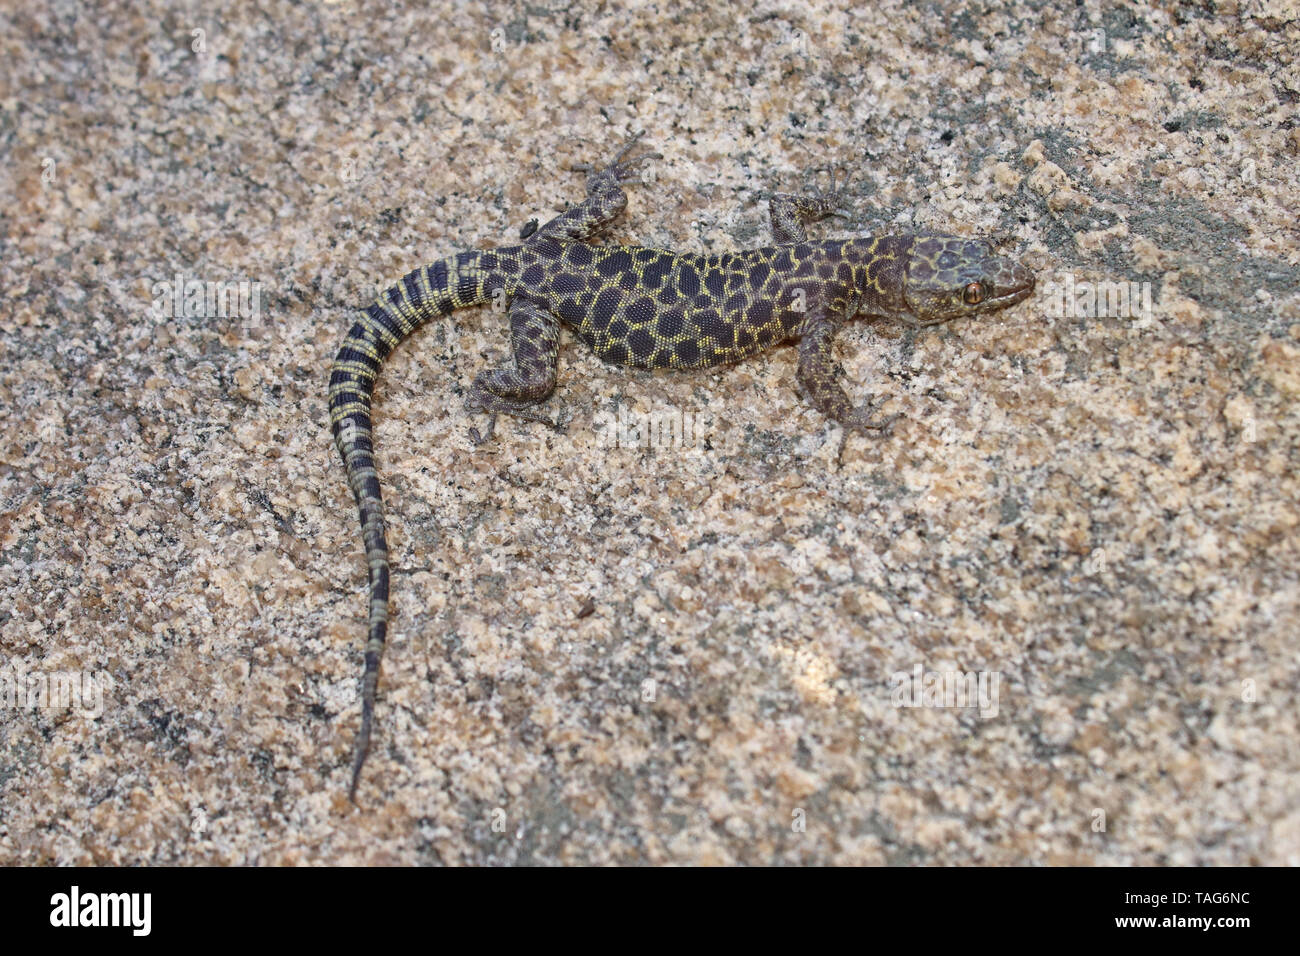 Granite Night Lizard (Xantusia henshawi) Stock Photo